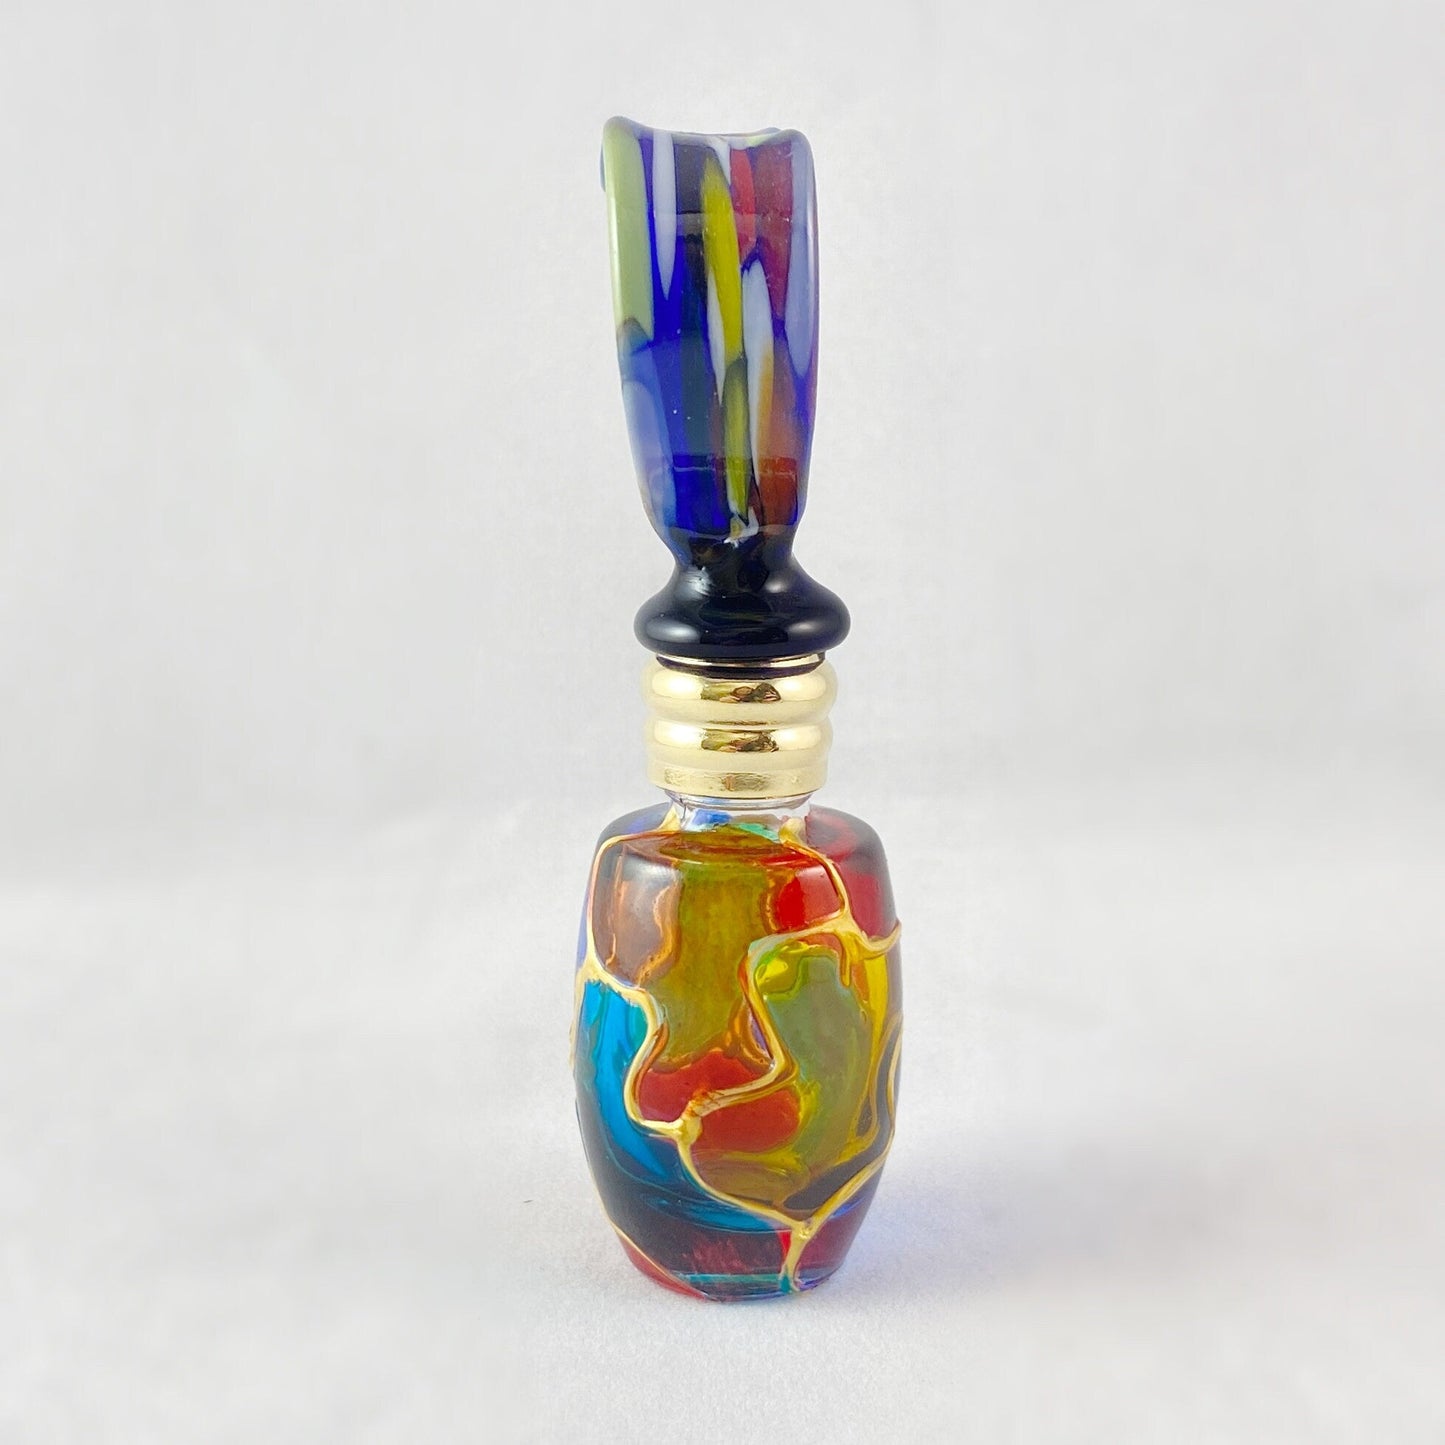 Heart Top Venetian Glass Perfume Bottle - Handmade in Italy, Colorful Murano Glass